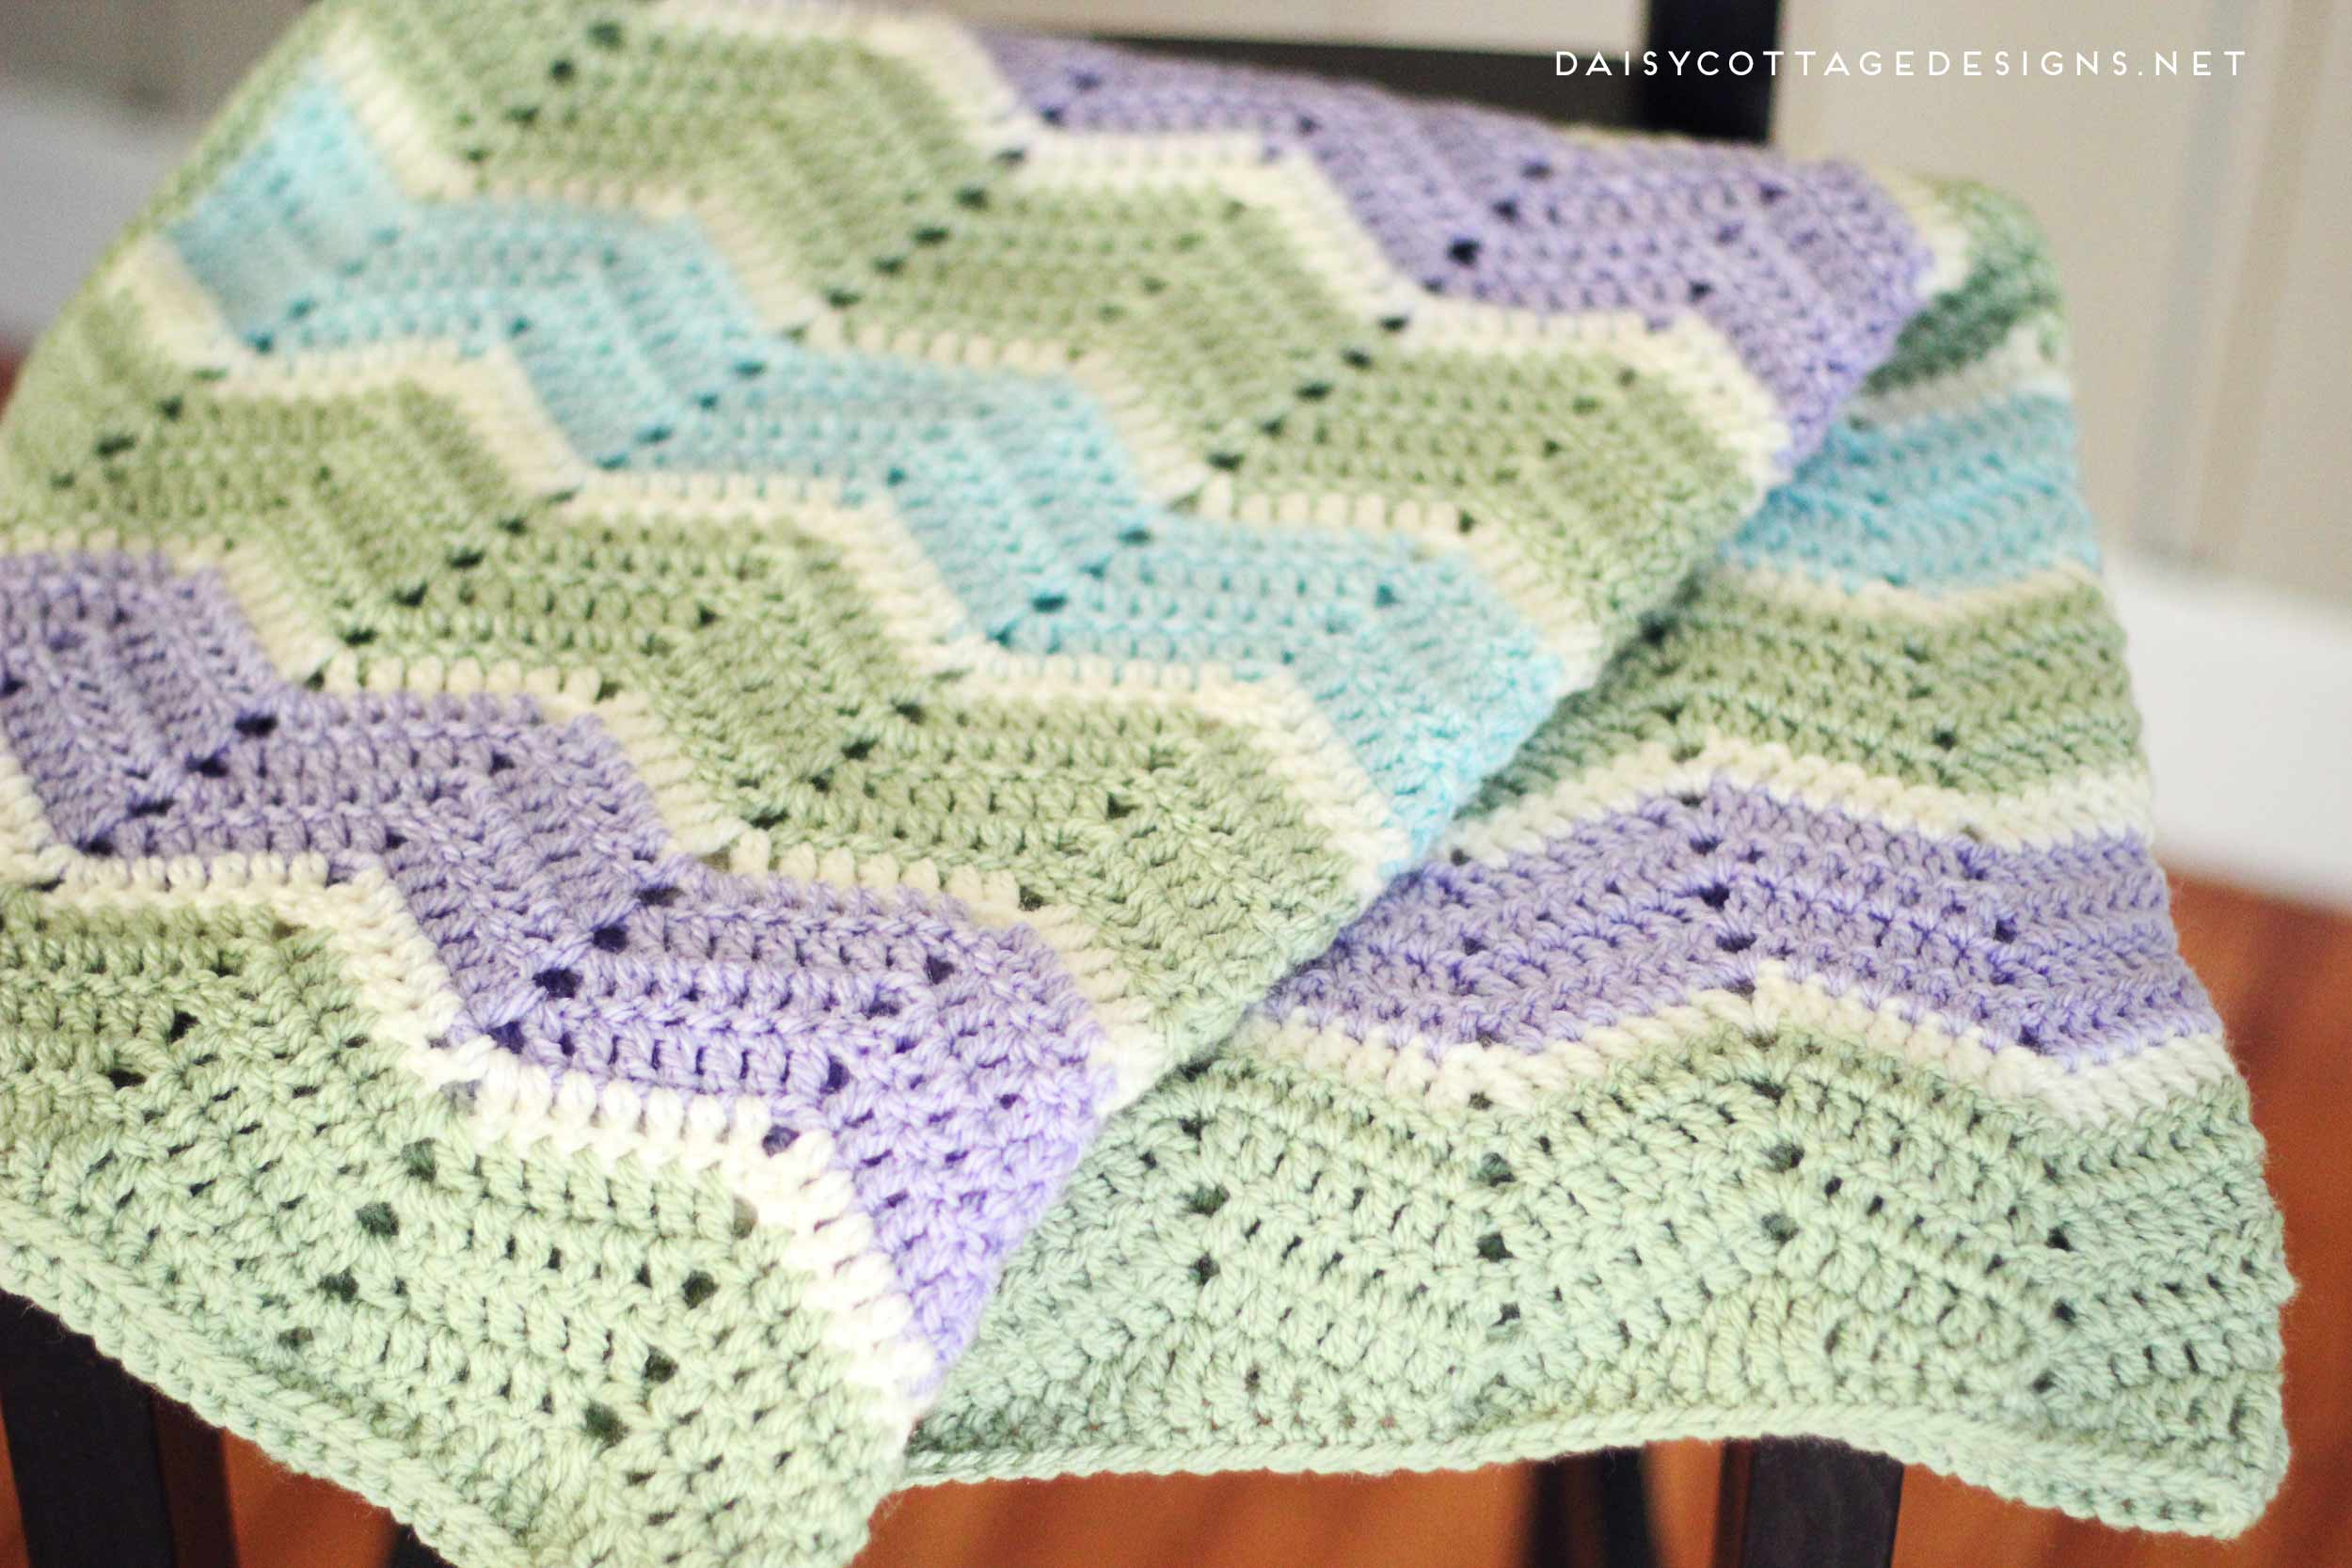 Chevron Crochet Baby Blanket Pattern Easy Chevron Blanket Crochet Pattern Daisy Cottage Designs